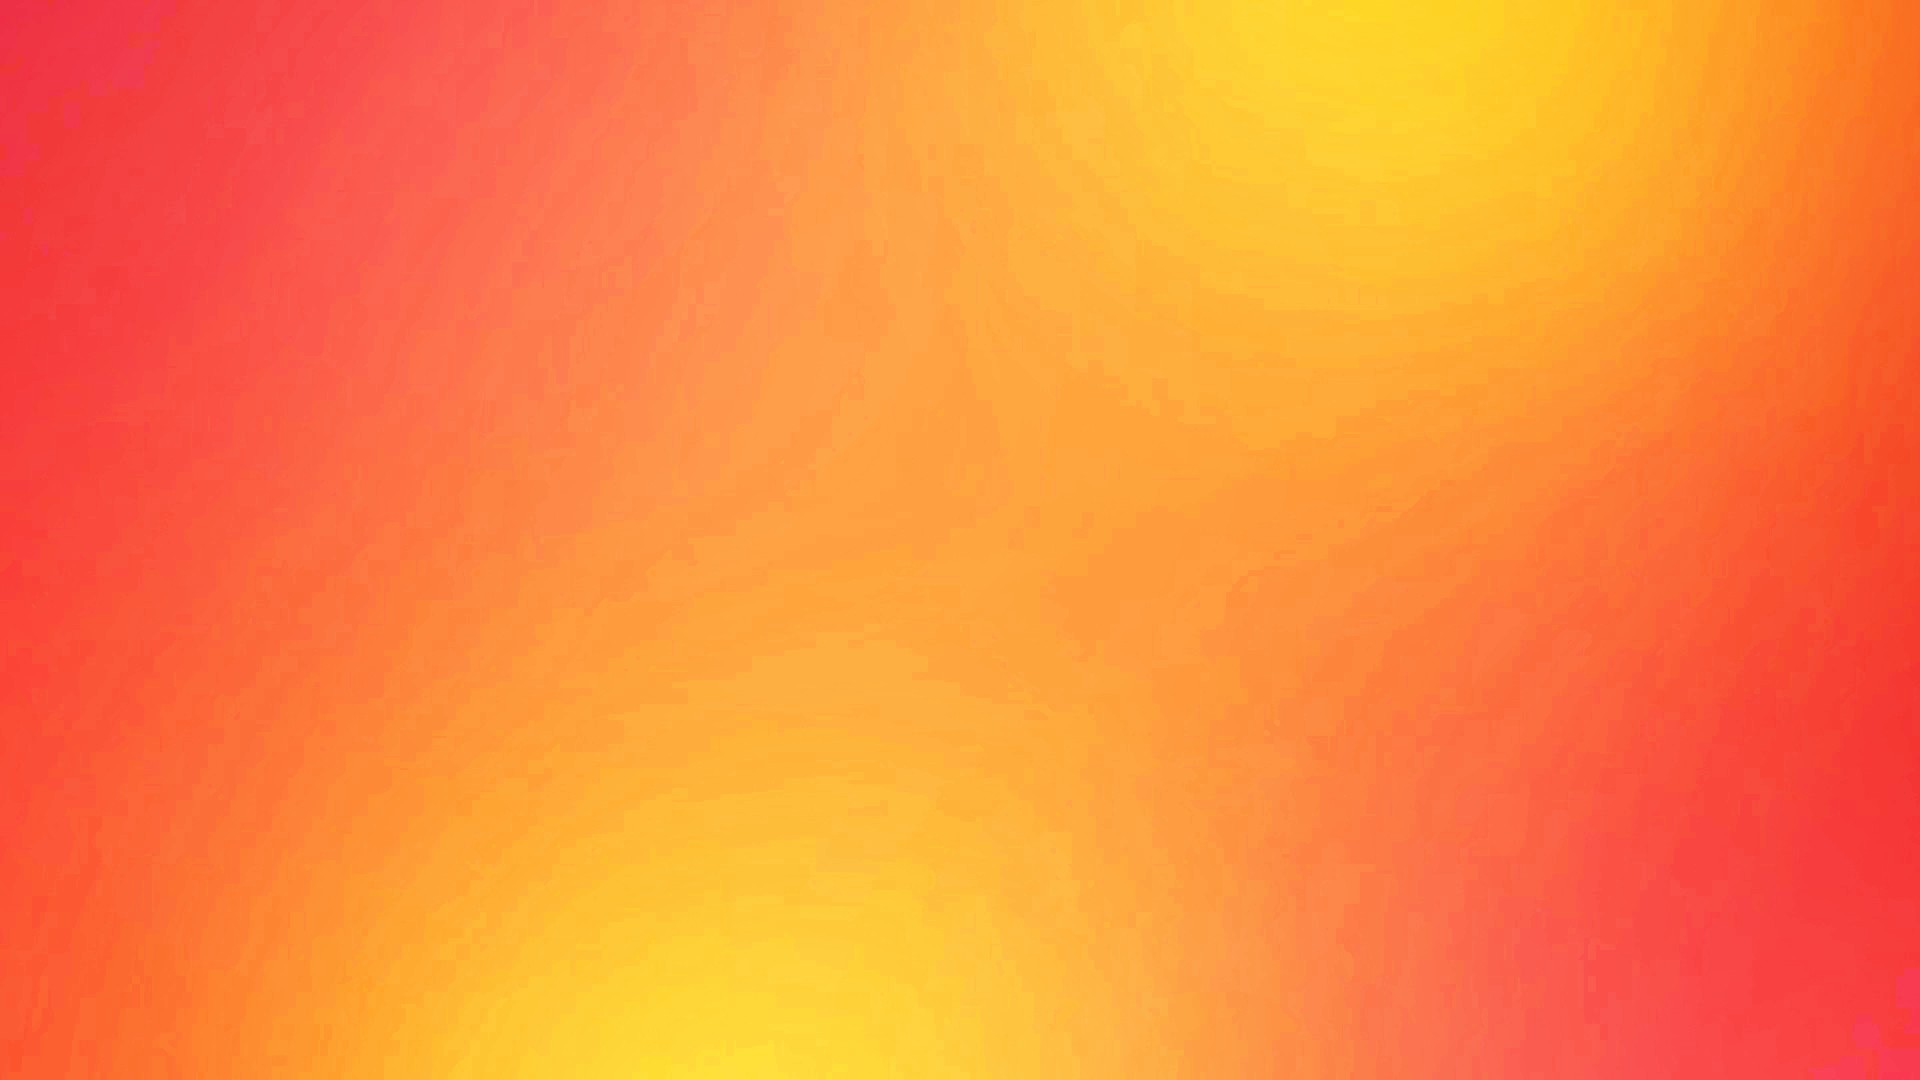 Orange And Yellow Gradient Background